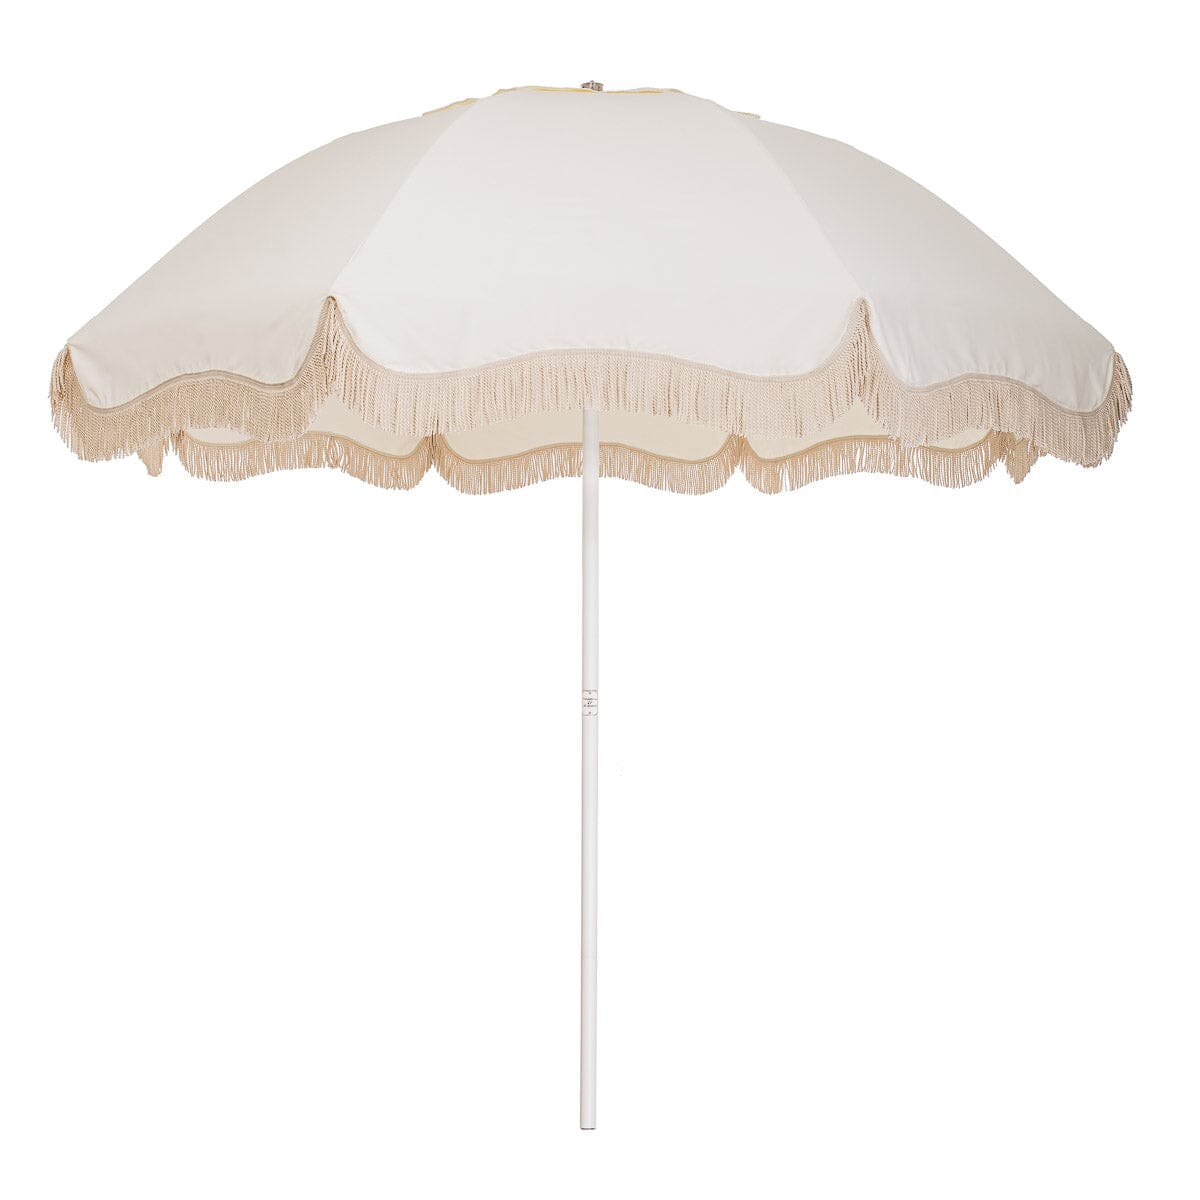 Large white umbrella on white background front facing